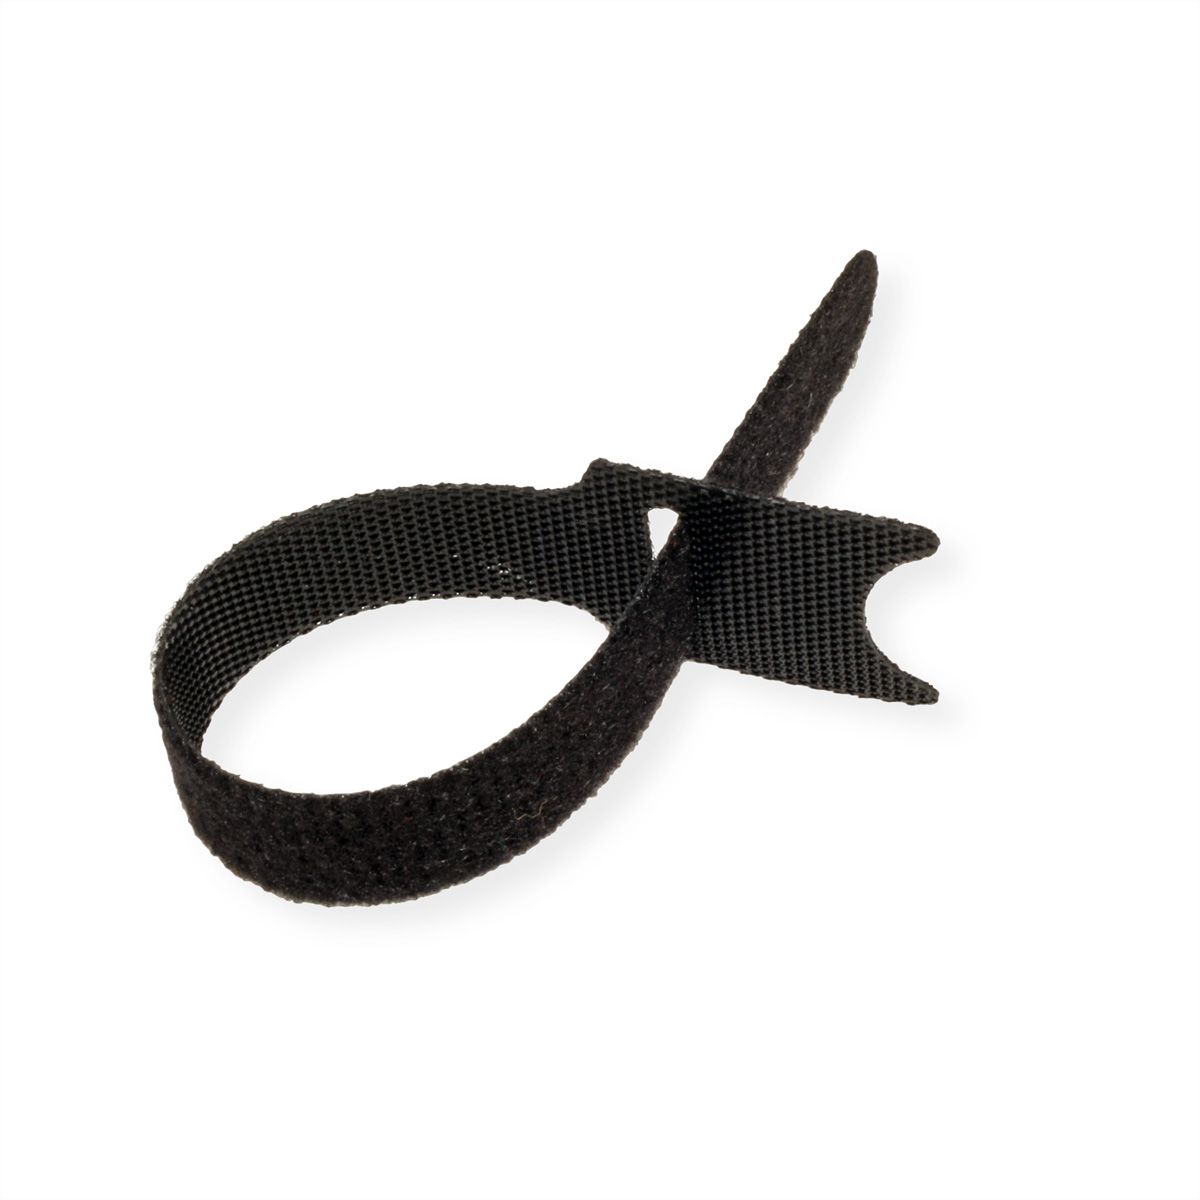 VALUE Strap Cable Binder with Flap, black, 15 cm, 20 pieces/set ...